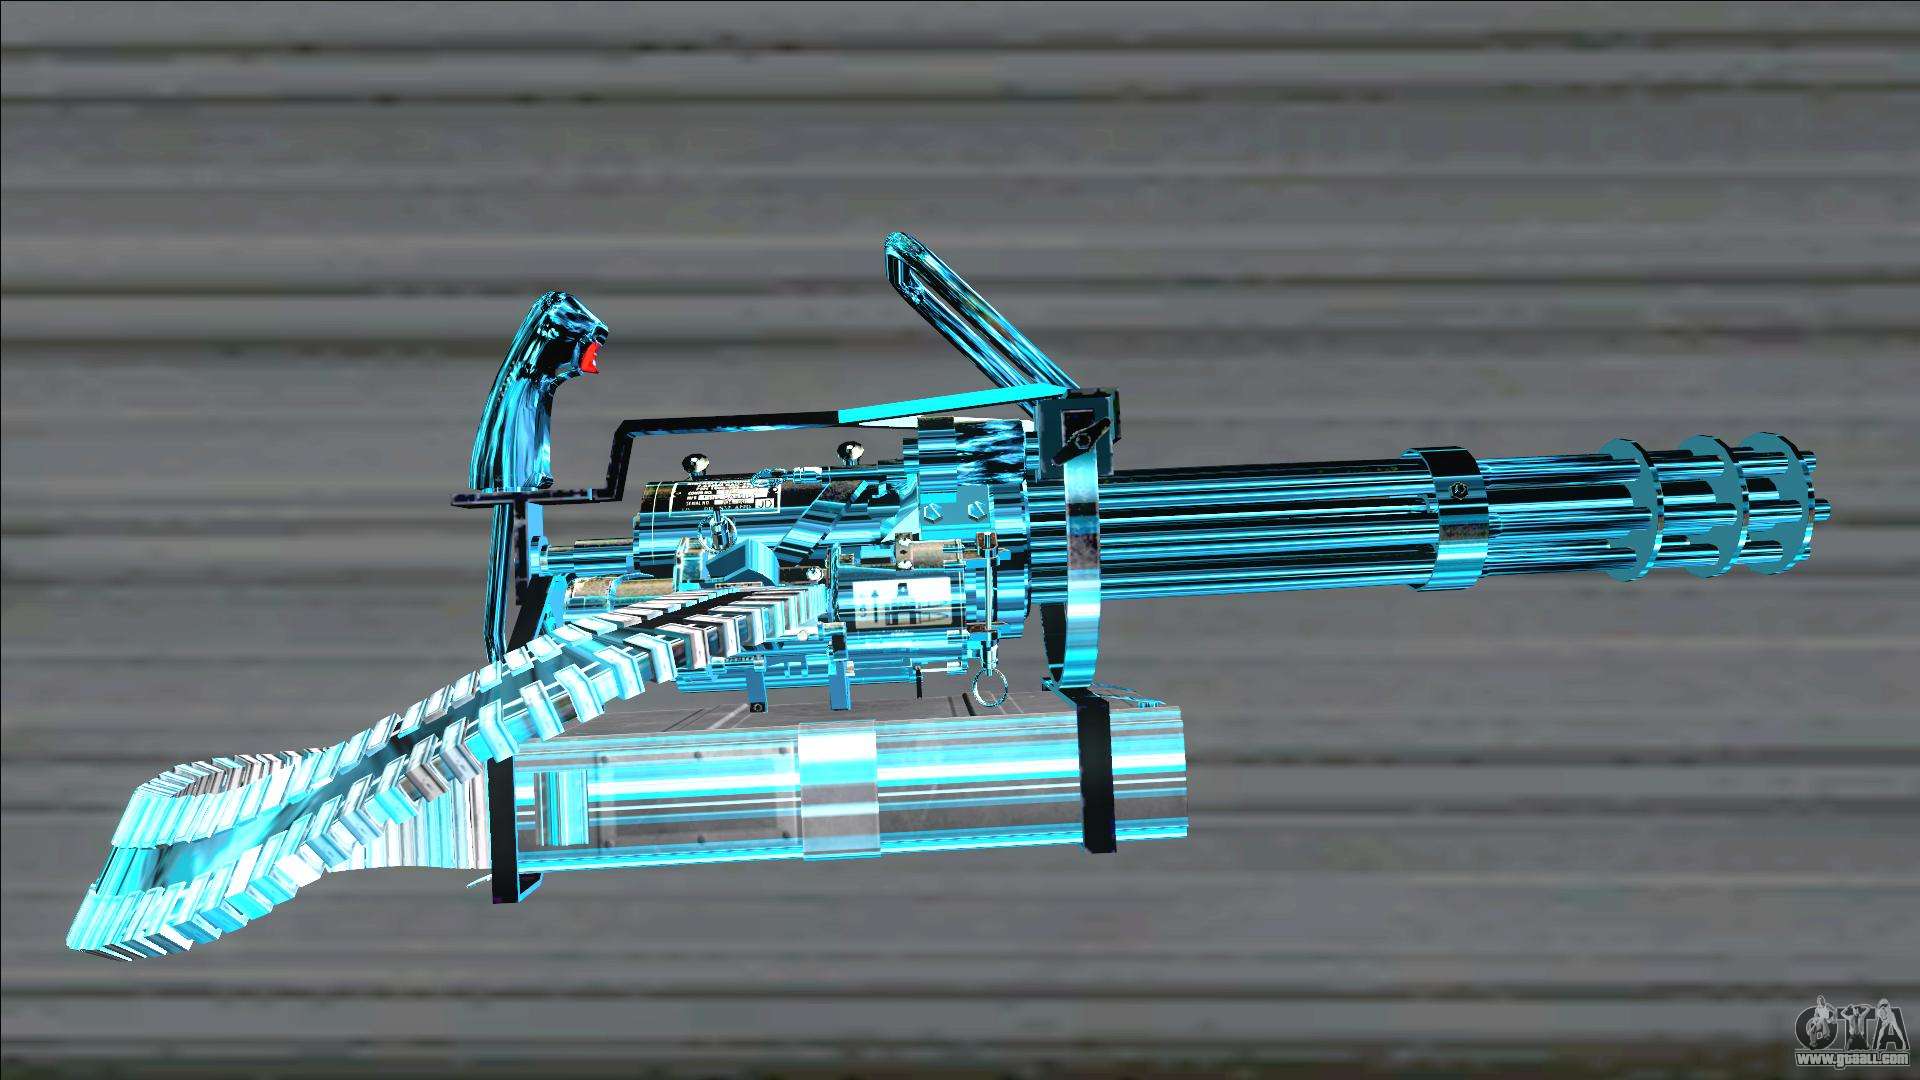 GTA San Andreas Jetpack with Miniguns v1.2 Mod 